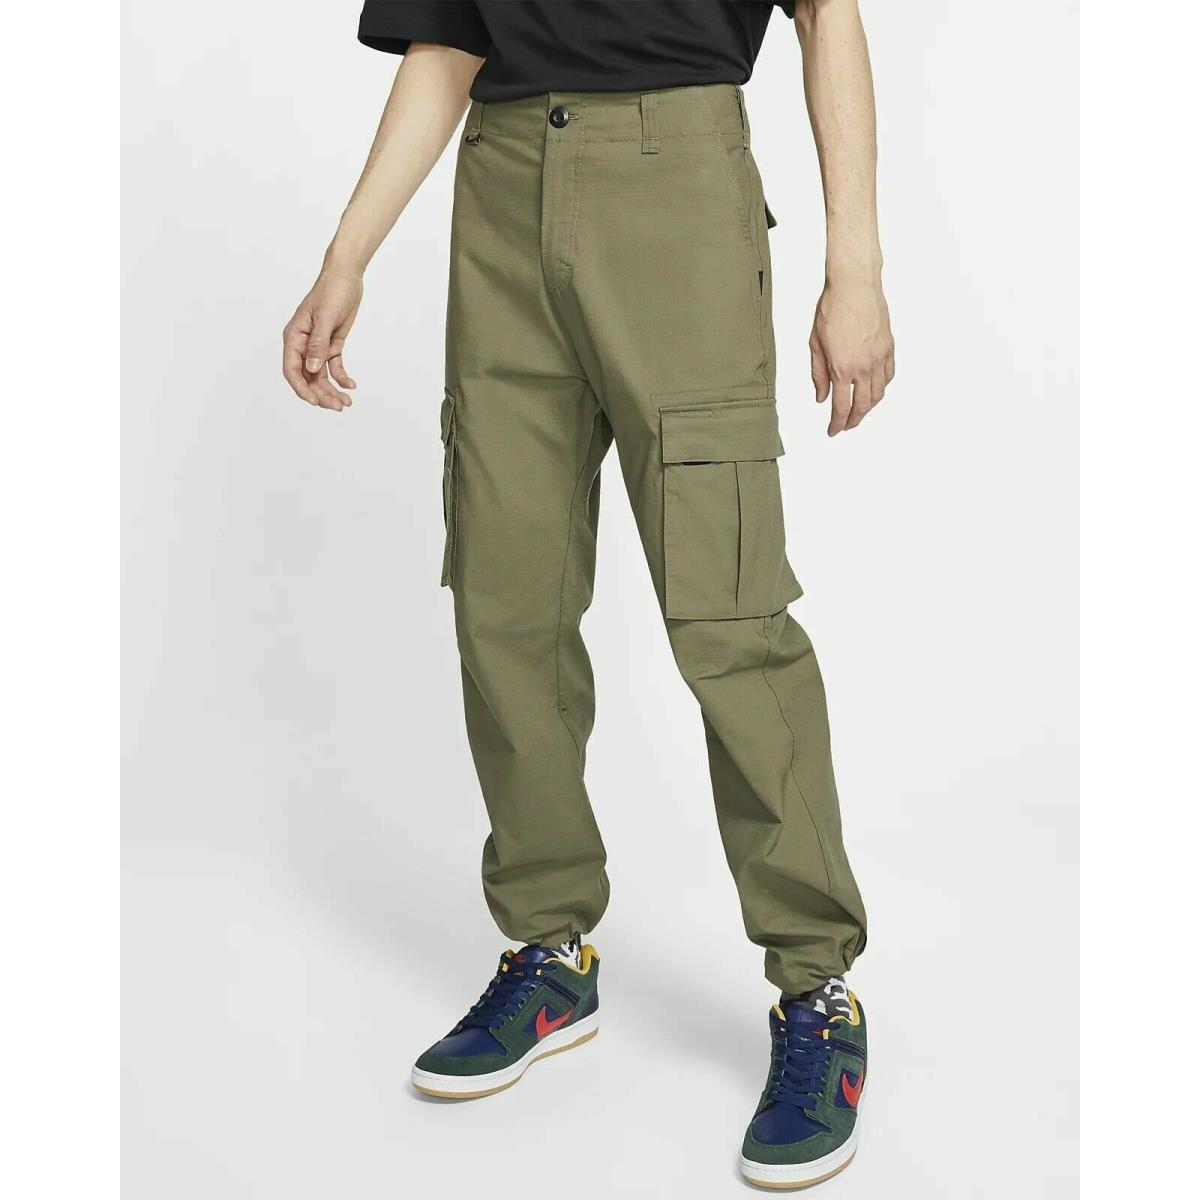 Nike SB Flex Ftm Cargo Pants Size 38 Olive Green Skateboarding AT3494-222